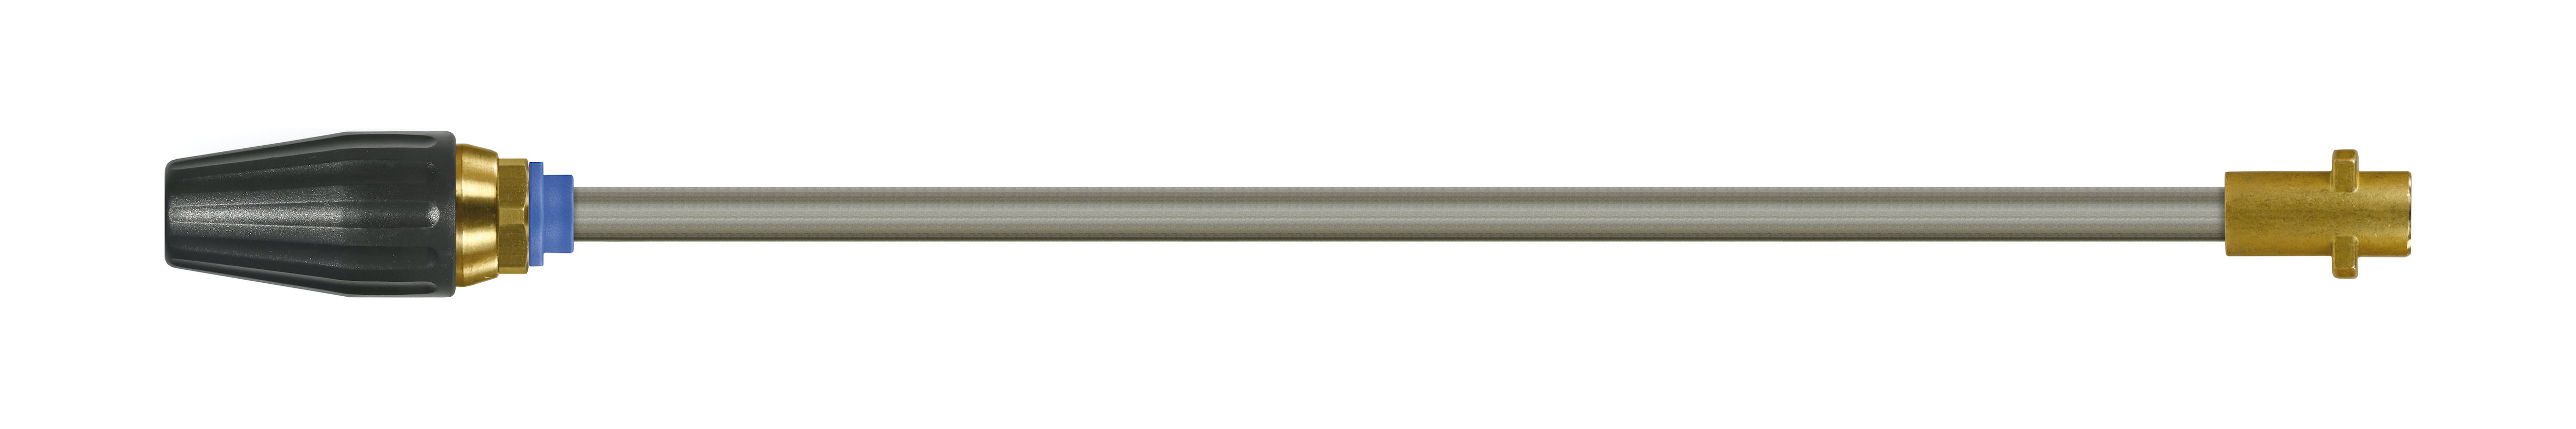 Rotabuse céramique avec lance 430mm, 100-250 bar, Calibre 055.